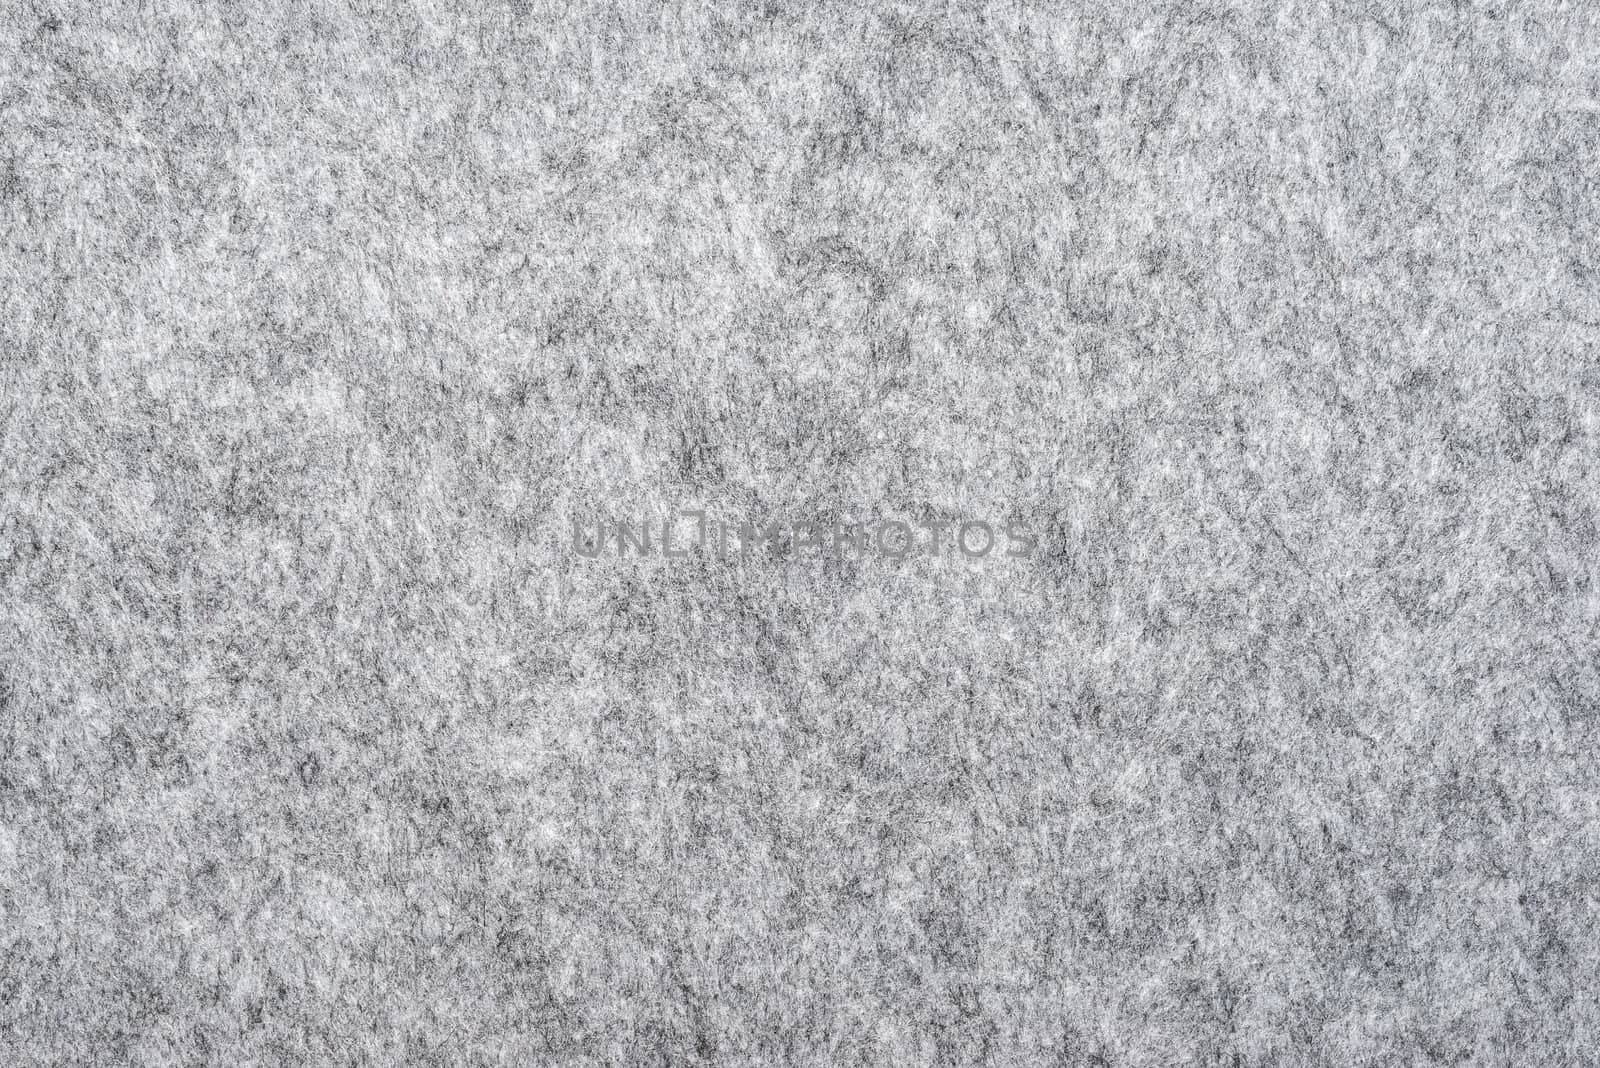 macro of grey felt texture for backgrounds